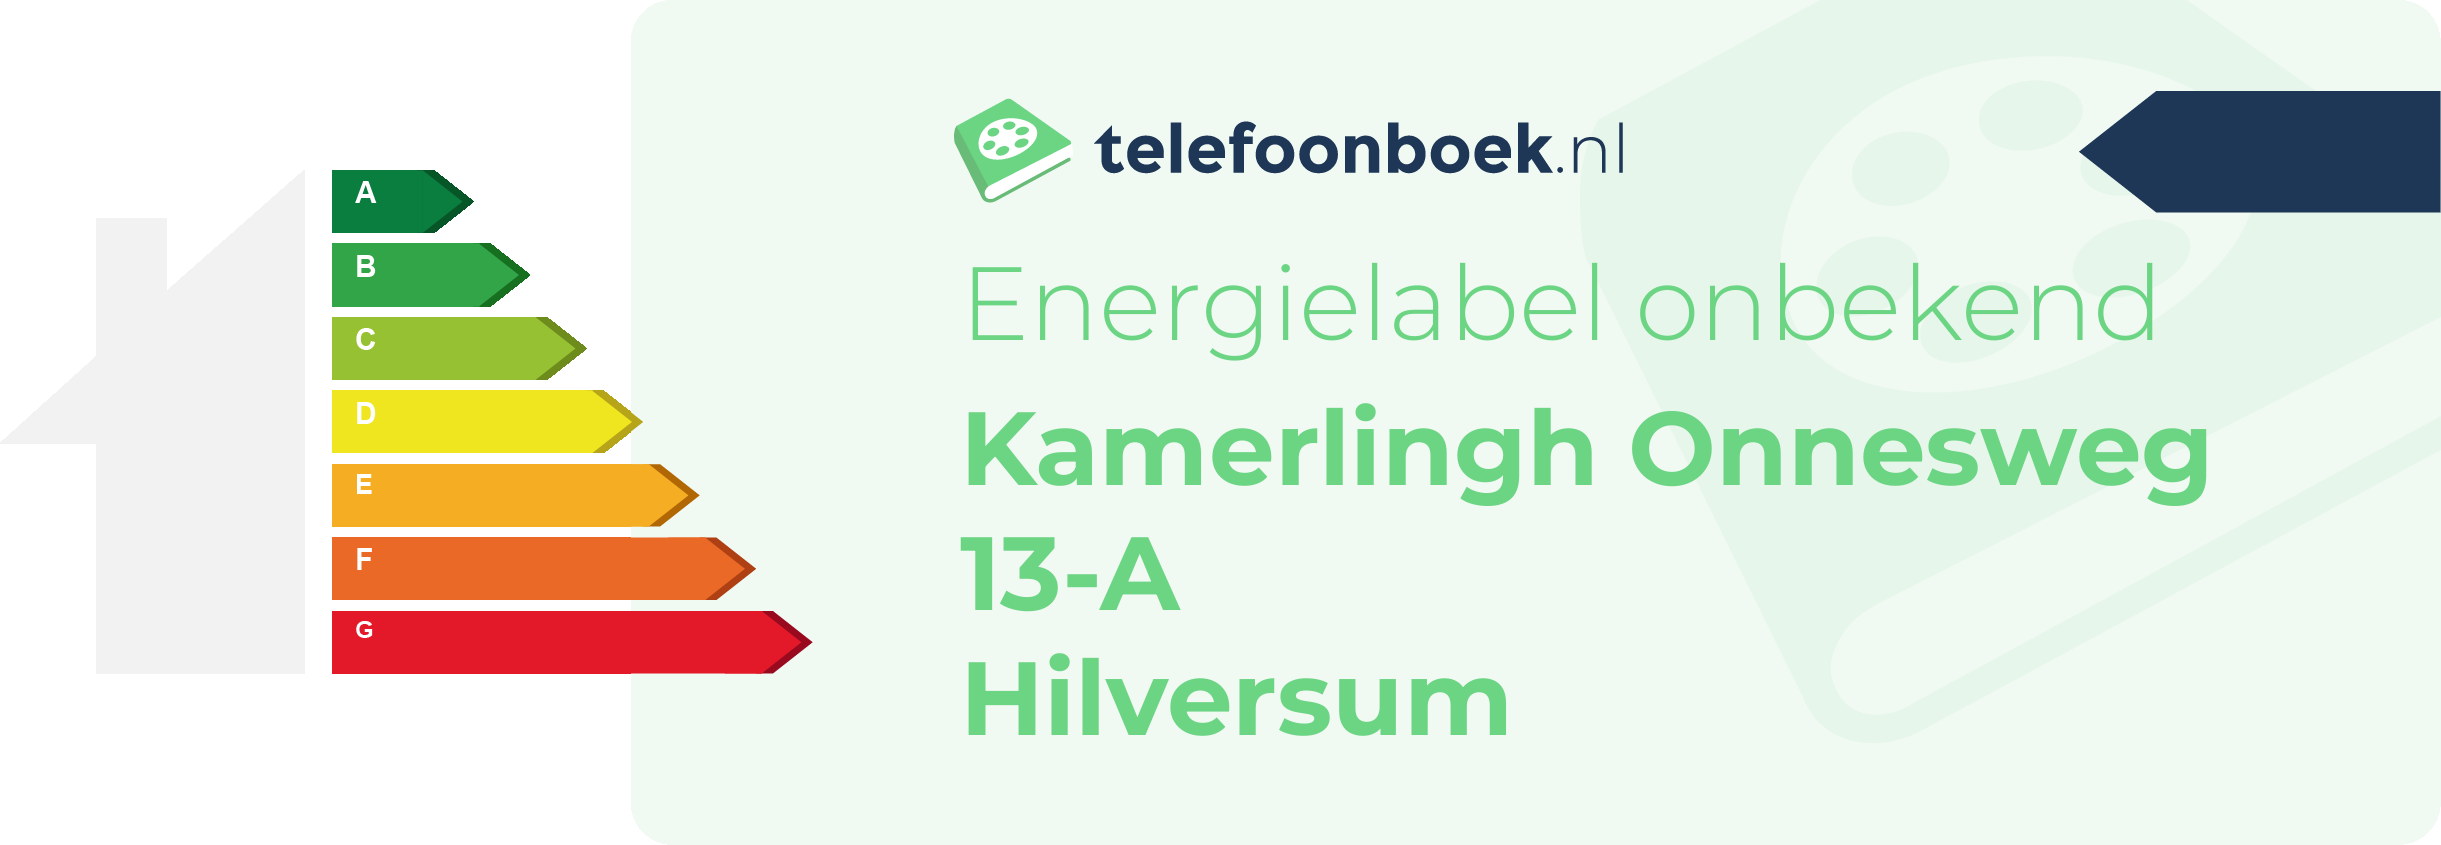 Energielabel Kamerlingh Onnesweg 13-A Hilversum